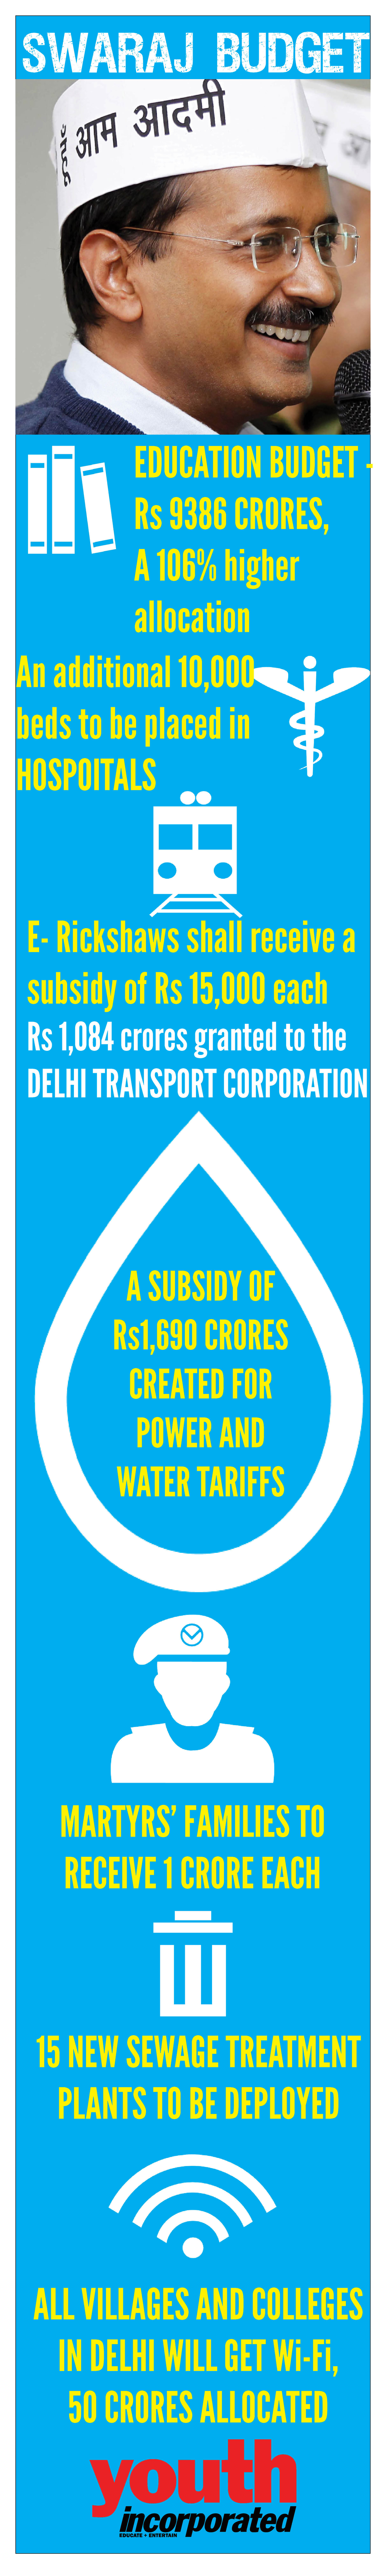 Swaraj Budget